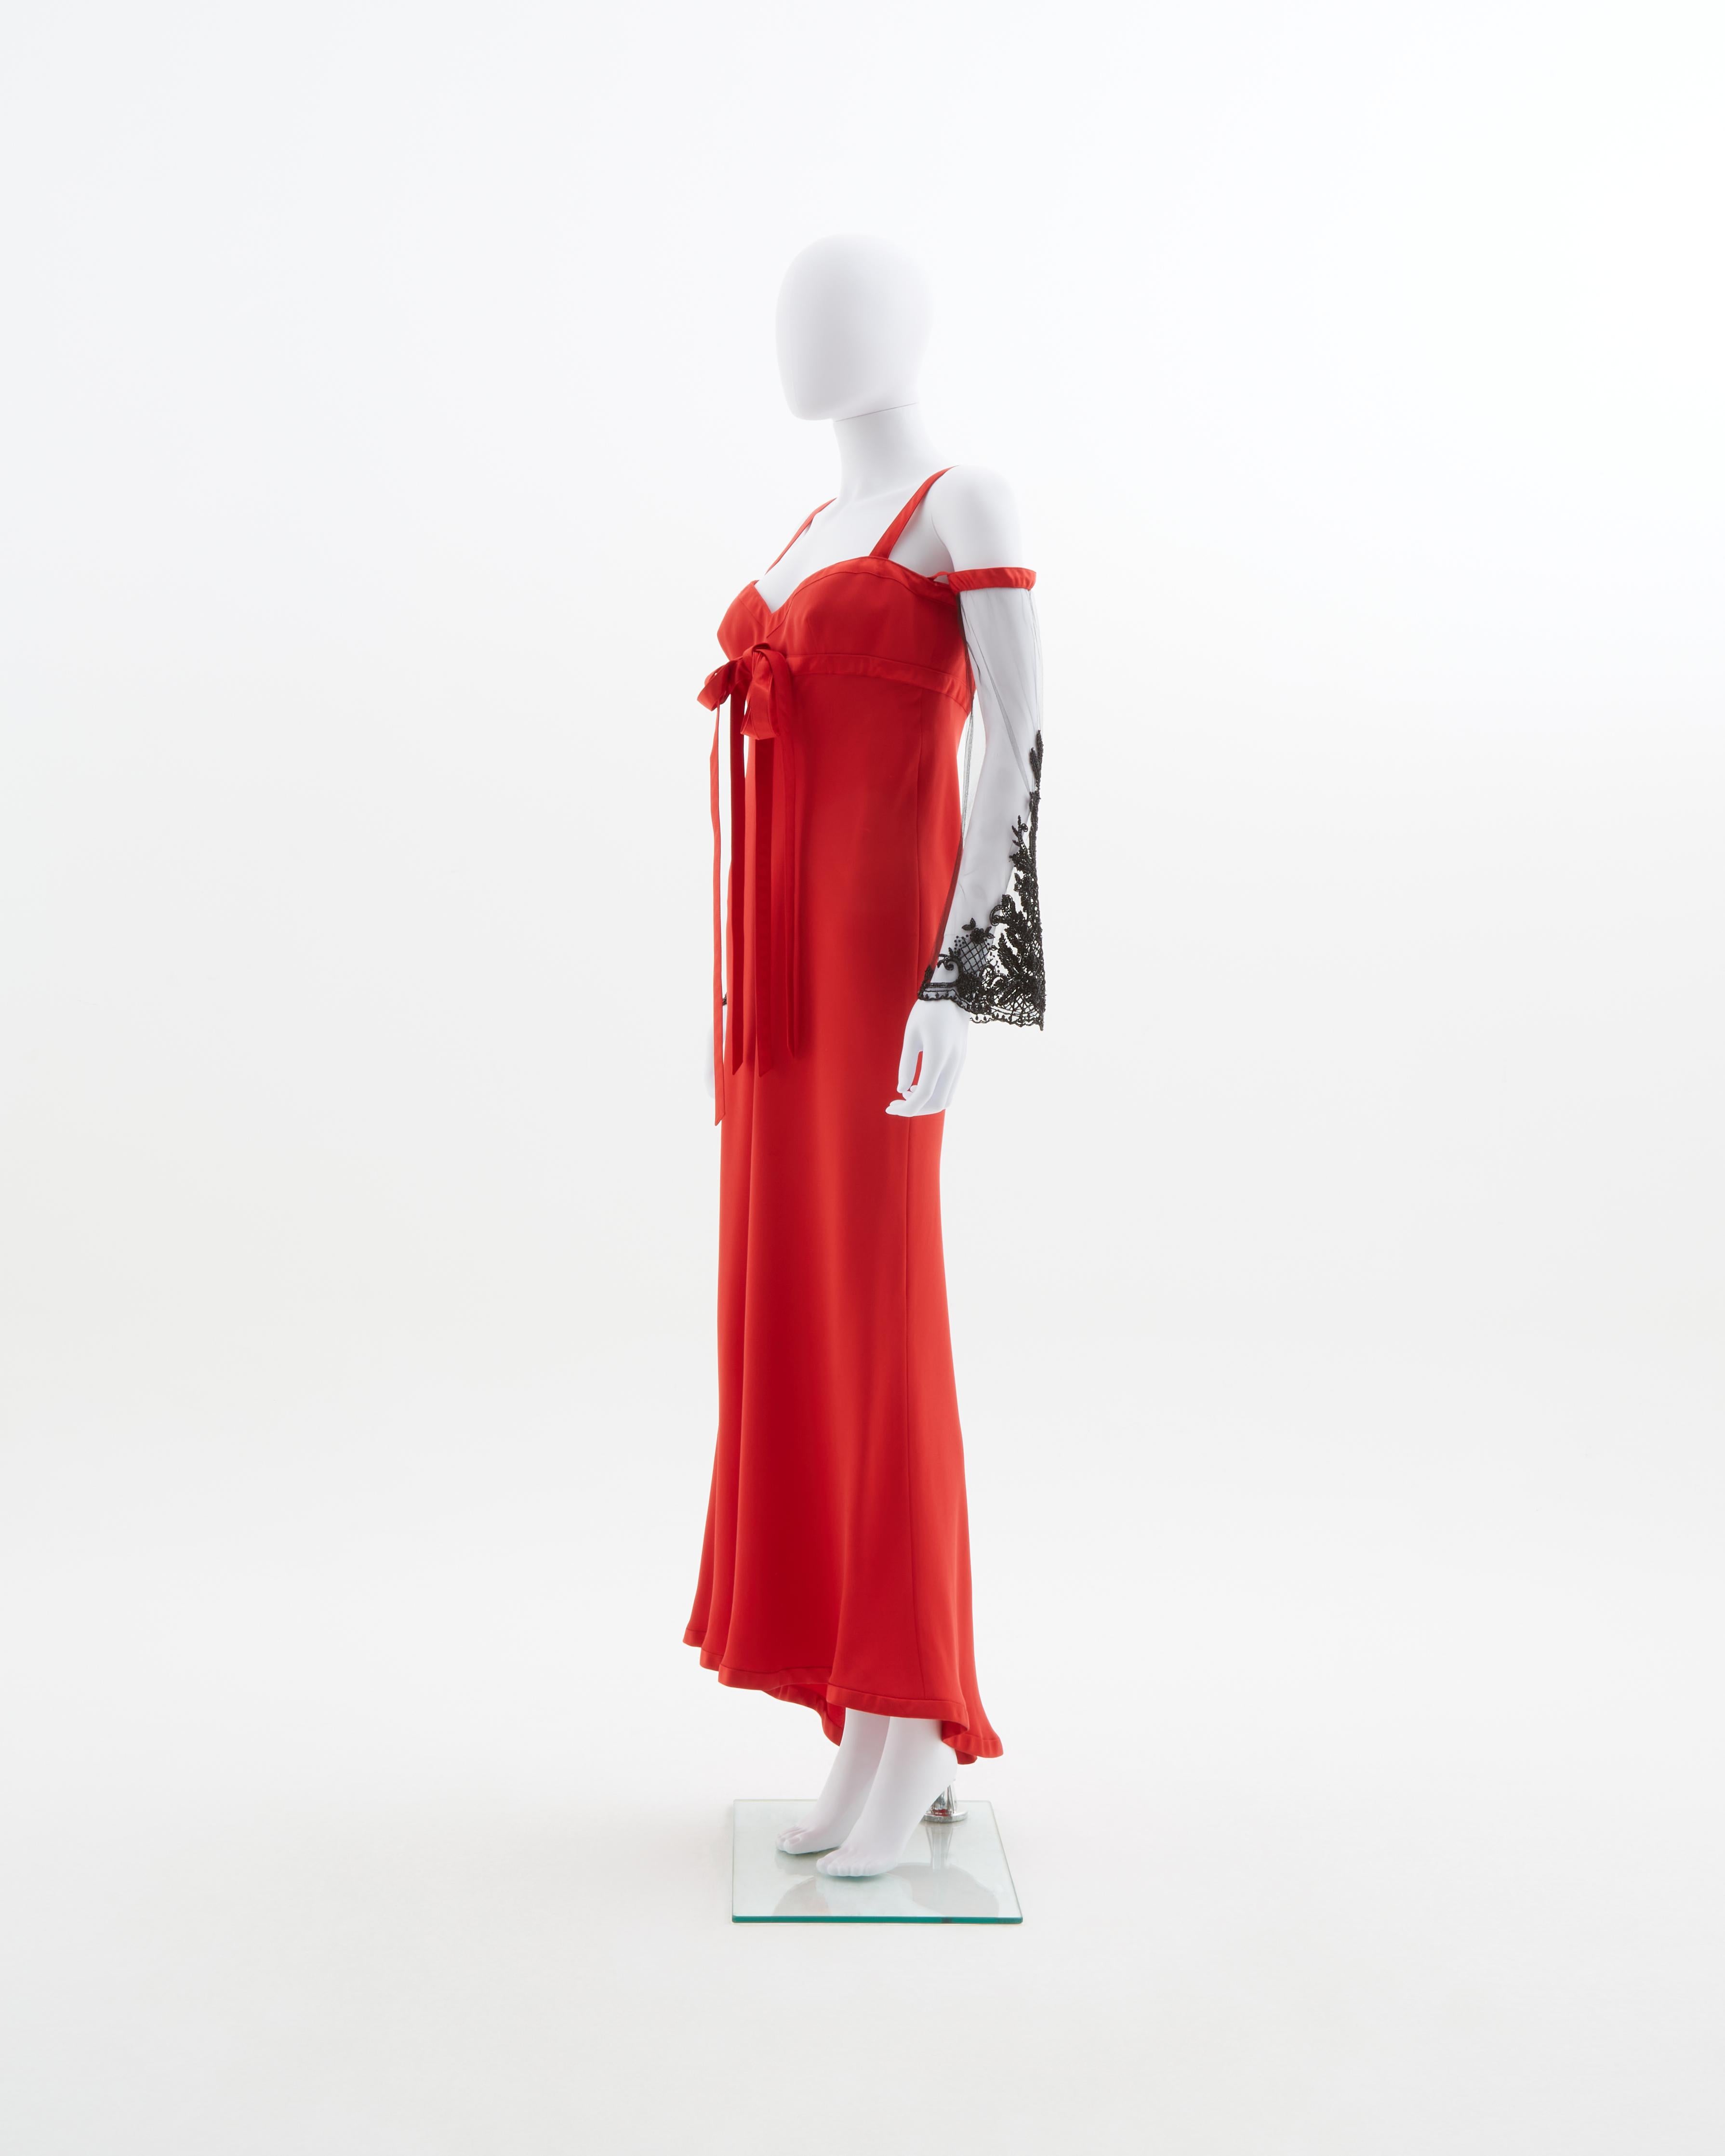 - Runway Look 84 
- Sold by Skof.Archive
- Red evening dress 
- Sequined sleeves 
- Hidden side zipper 
- Inner bustier with side zipper 
- Fall Winter 2005

Size : FR 40 - EN 44 - UK 12 - US 8 (EU)

Materials: 100% Silk

Bust 38 cm / 15